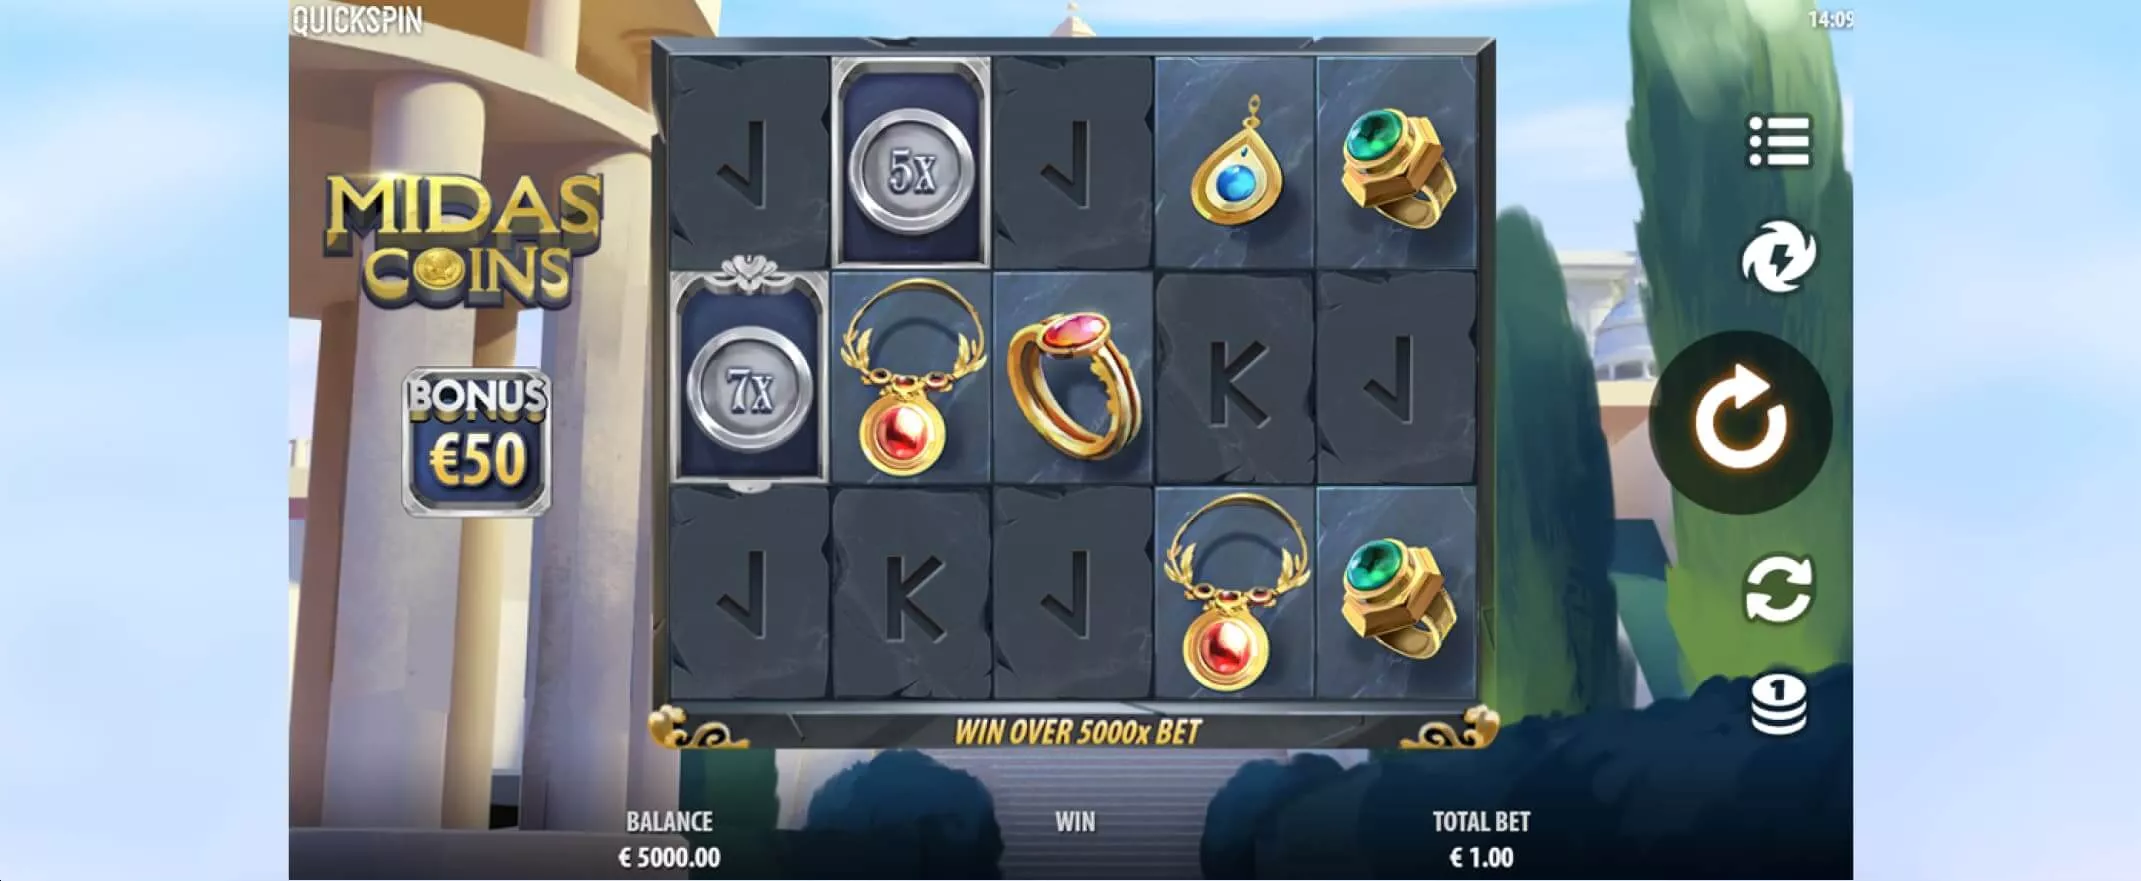 Midas Coins slot screenshot of the reels